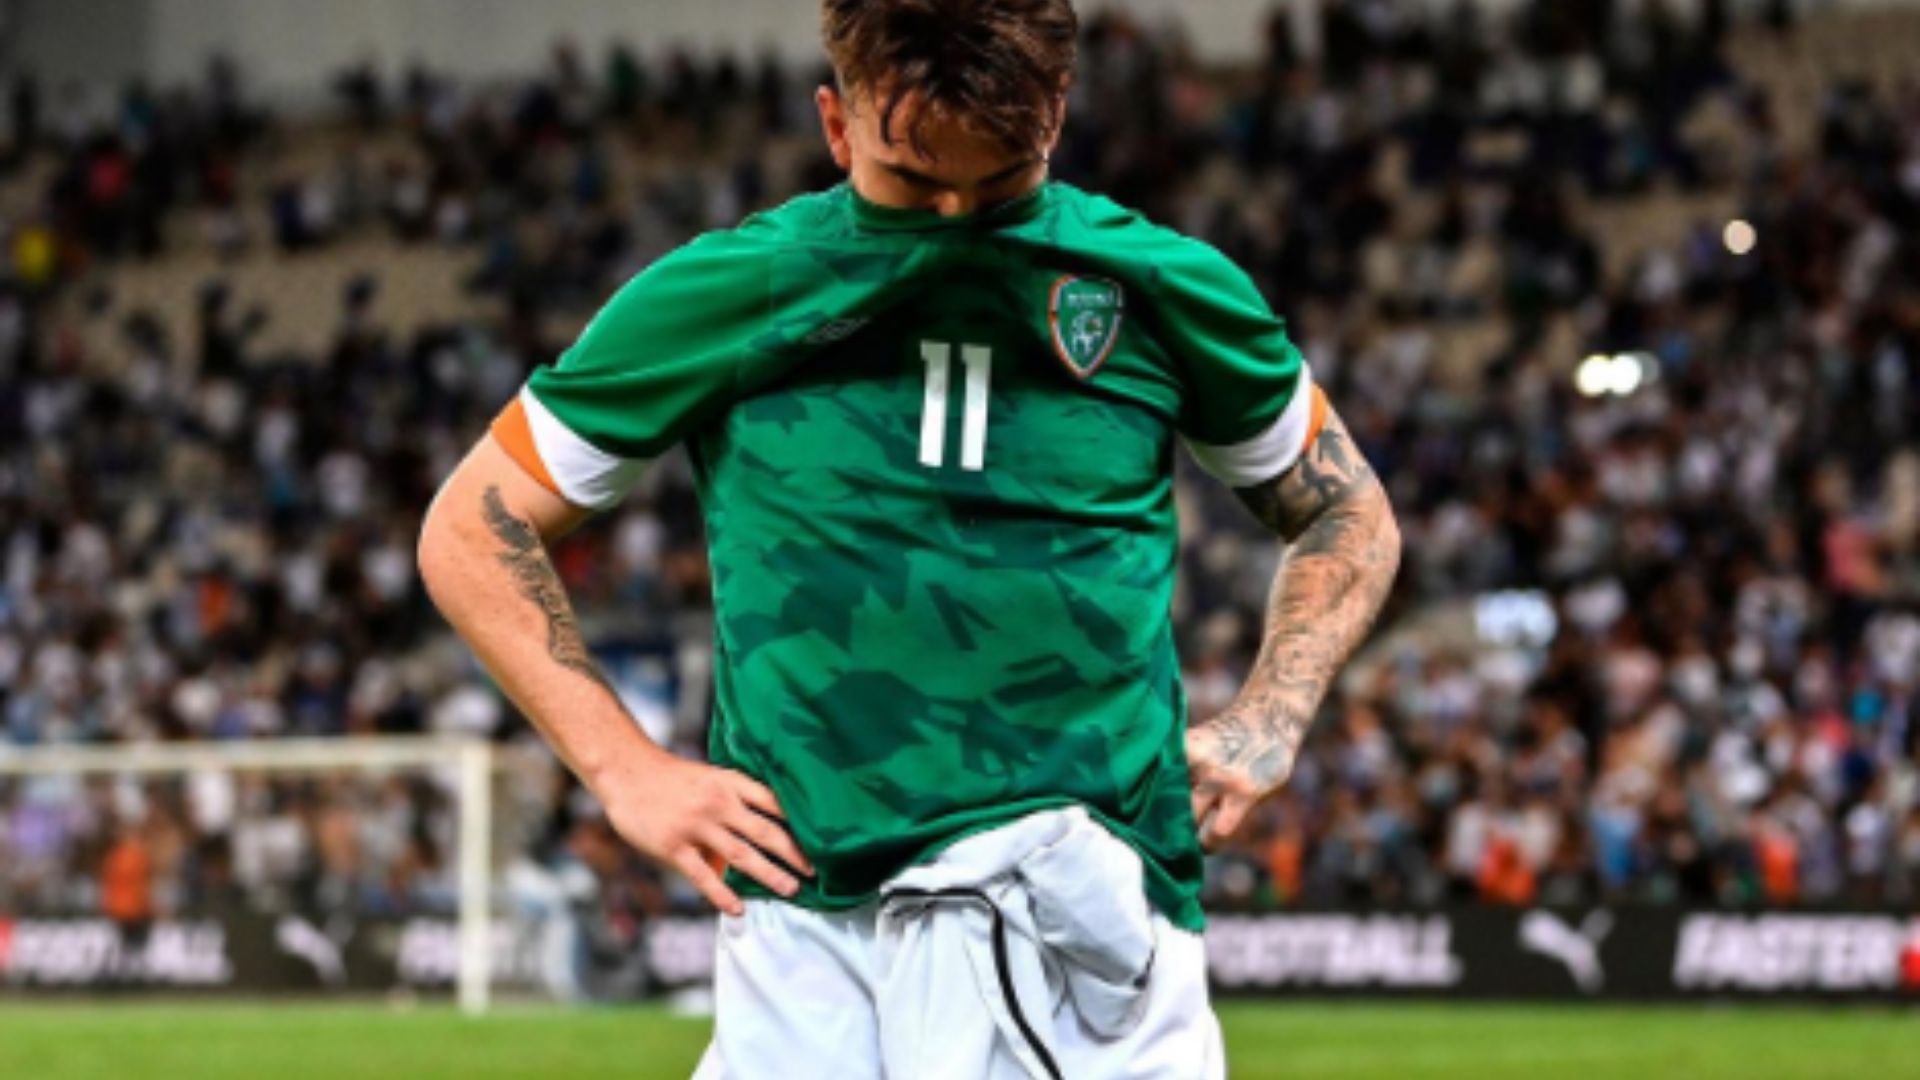 Shootout heartbreak for Irelands U-21s closes Euro hopes